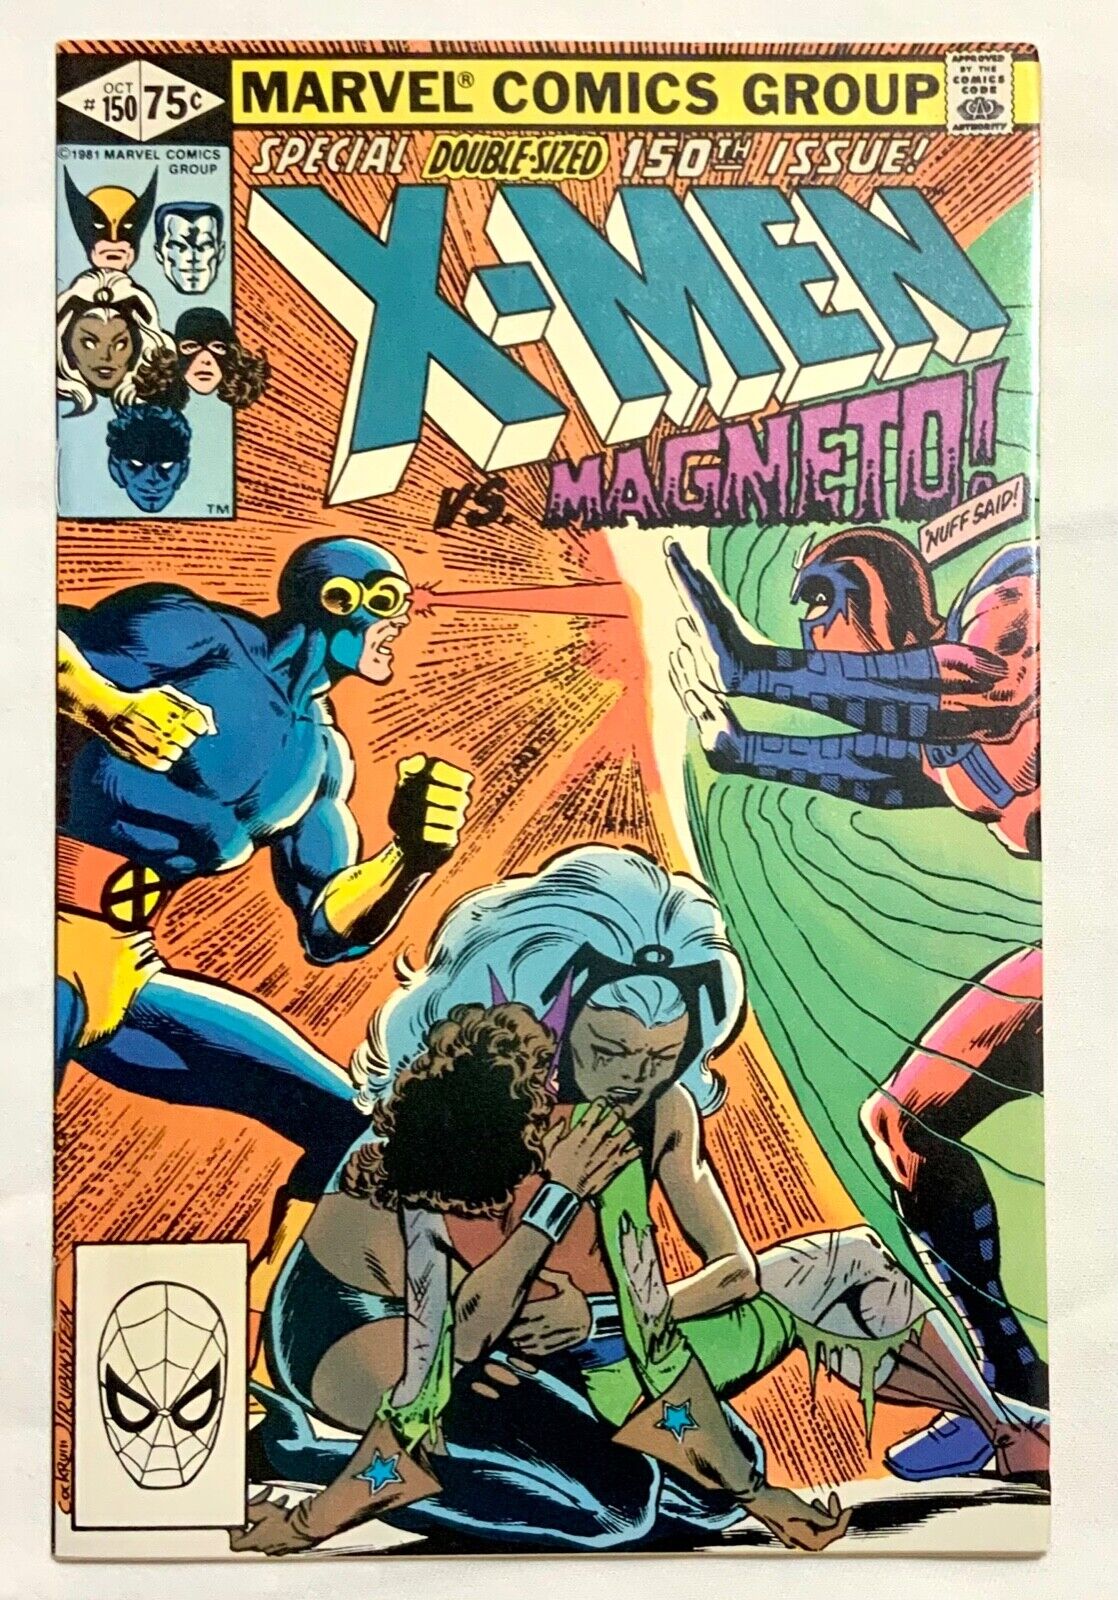 UNCANNY X-MEN #150 X-Men vs Magneto Special Double-Sized Issue (1981) NM 9.4